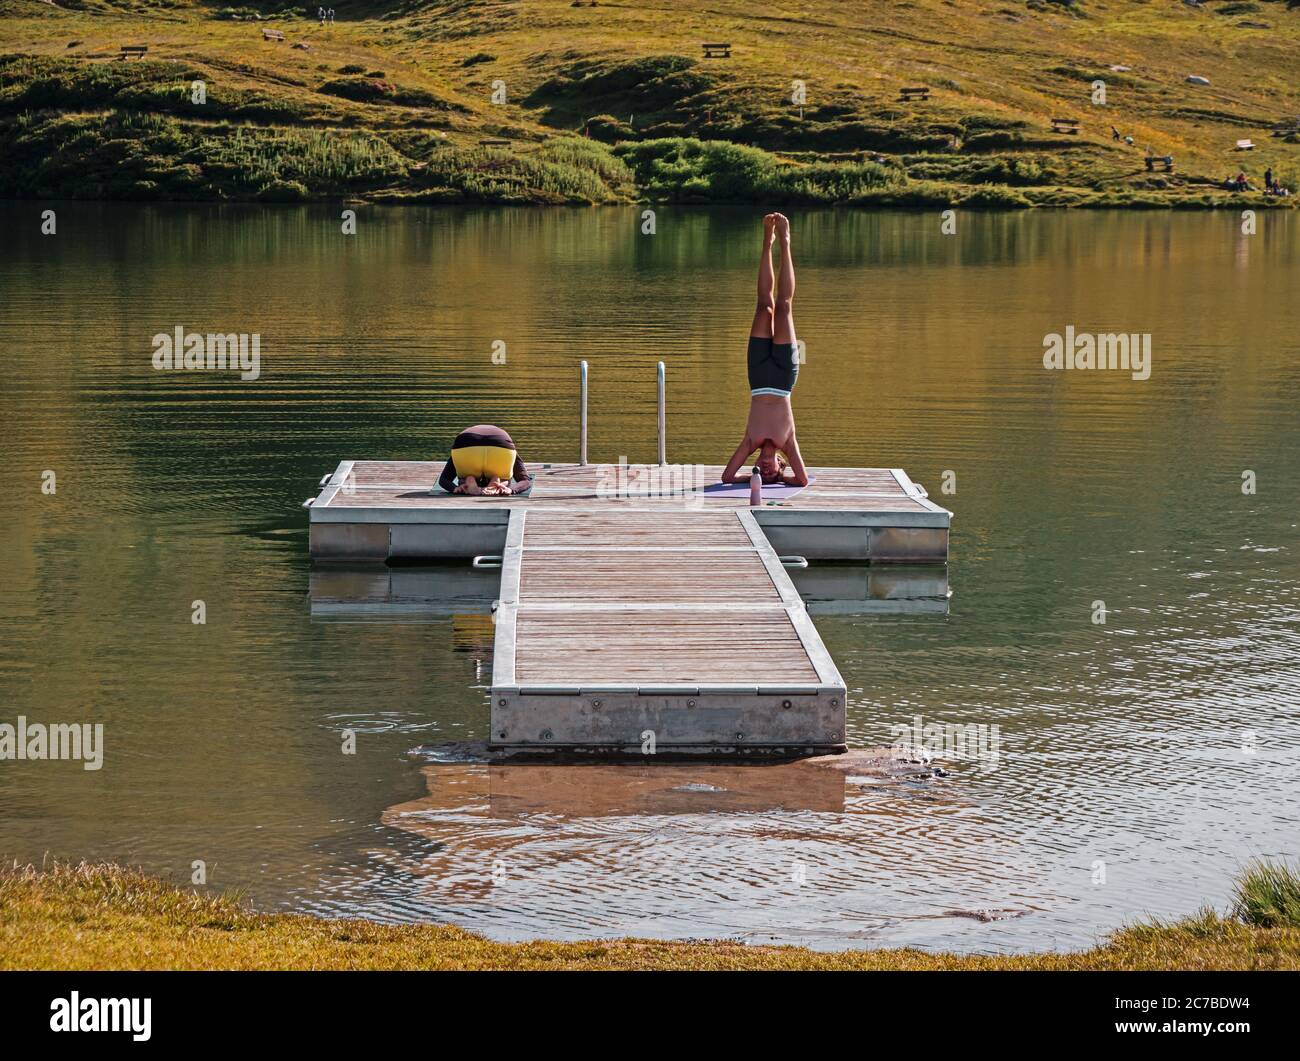 Bettmeralp, Valais, Switzerland - 07 15 2020: 2 women perform their morning yoga routine on a floating platform on a alpine lake. Stock Photo